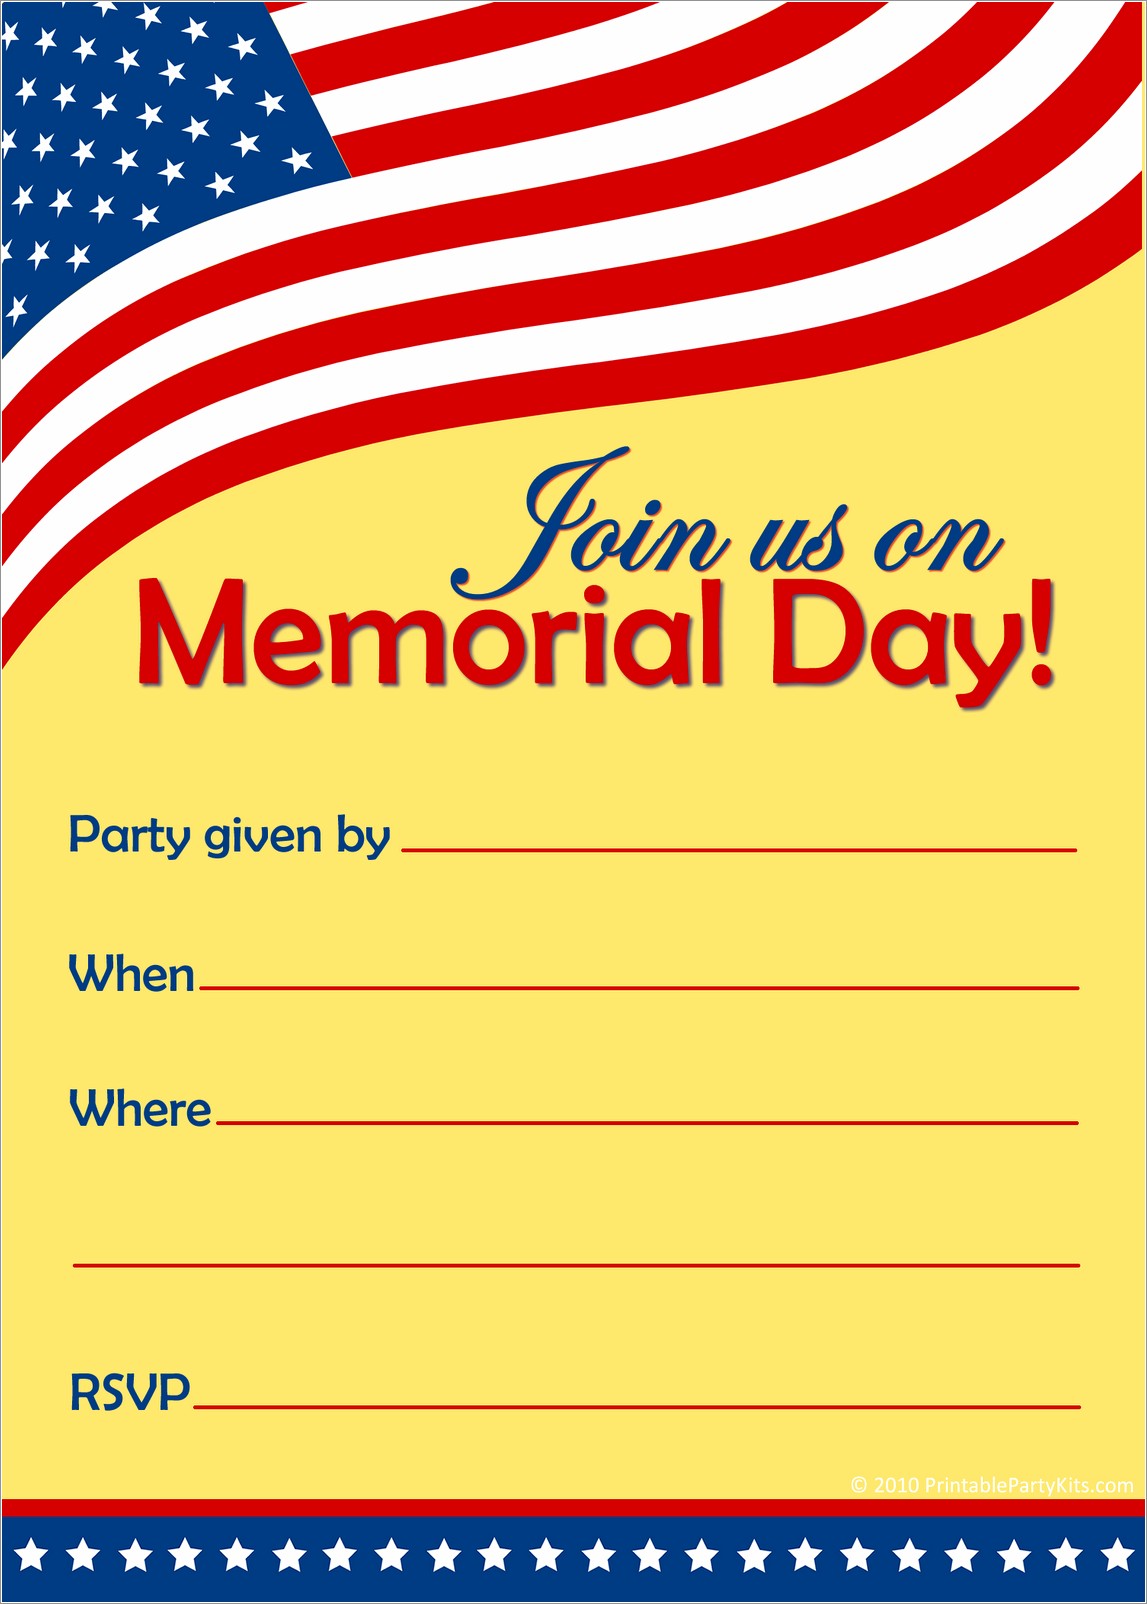 Free Memorial Day Invitation Templates